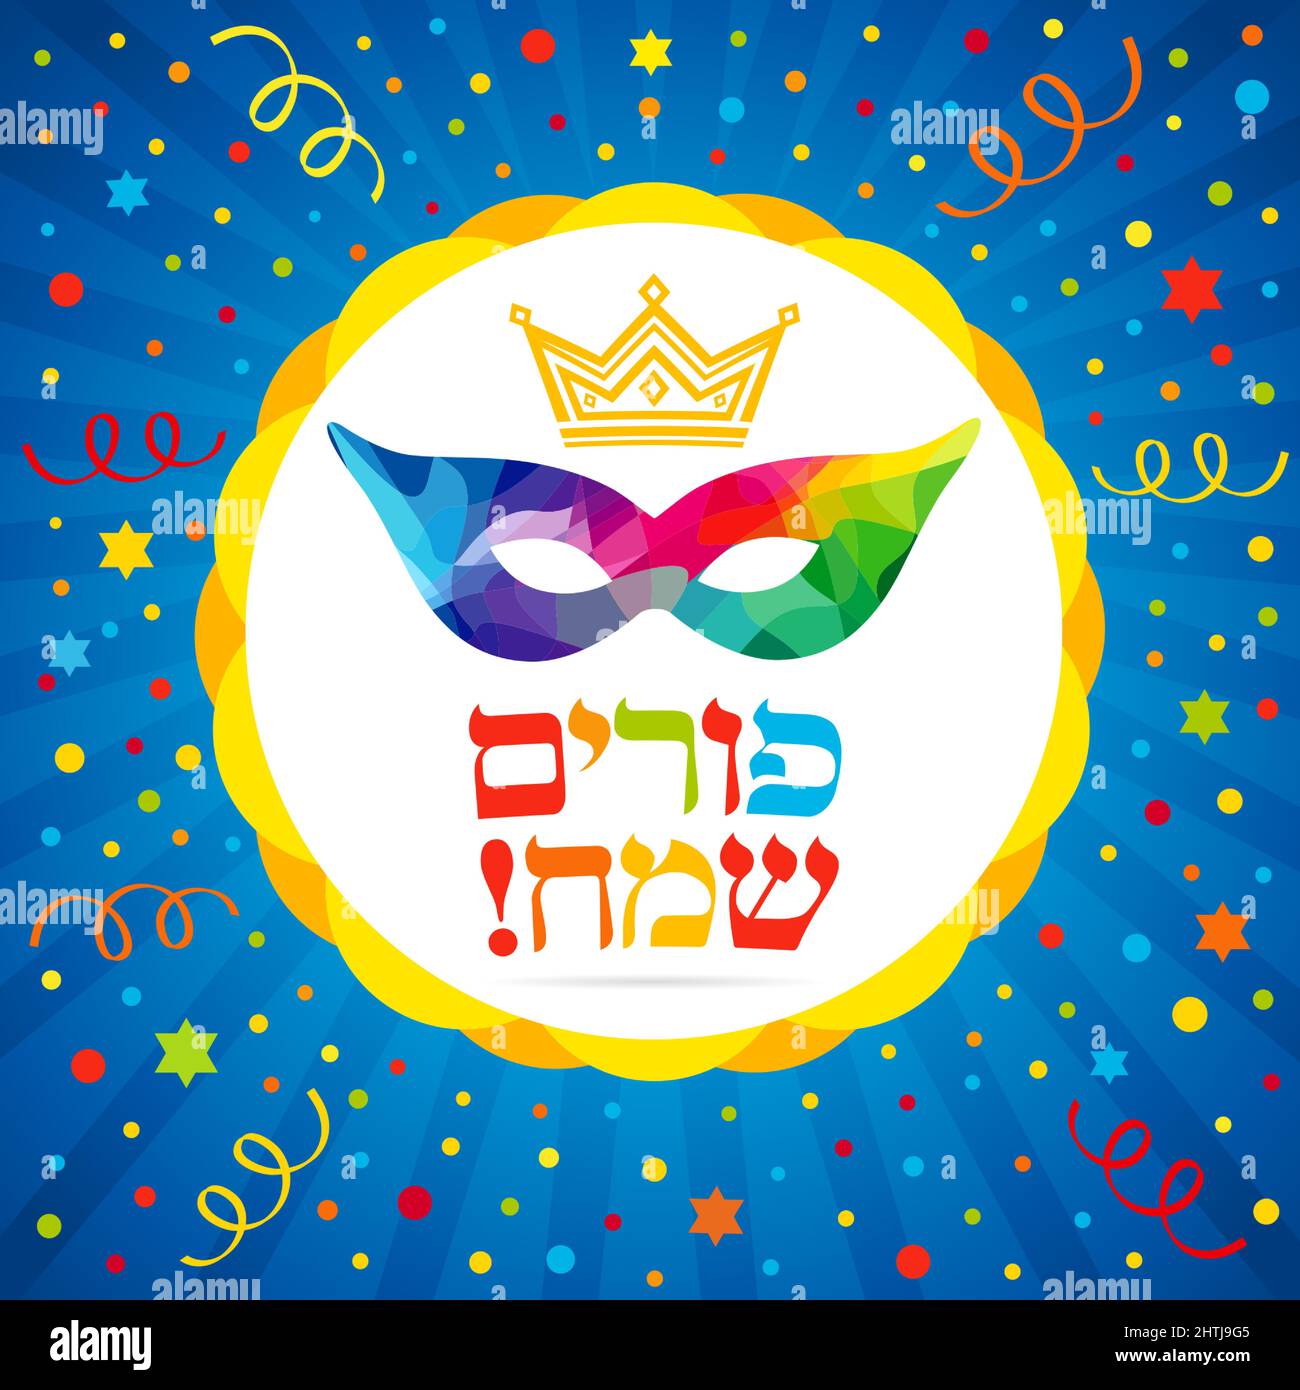 Happy purim congrats and colored confetti. Isolated abstract graphic design template. Happy Purim Jewish script, queen mask, colour backdrop, round lo Stock Vector